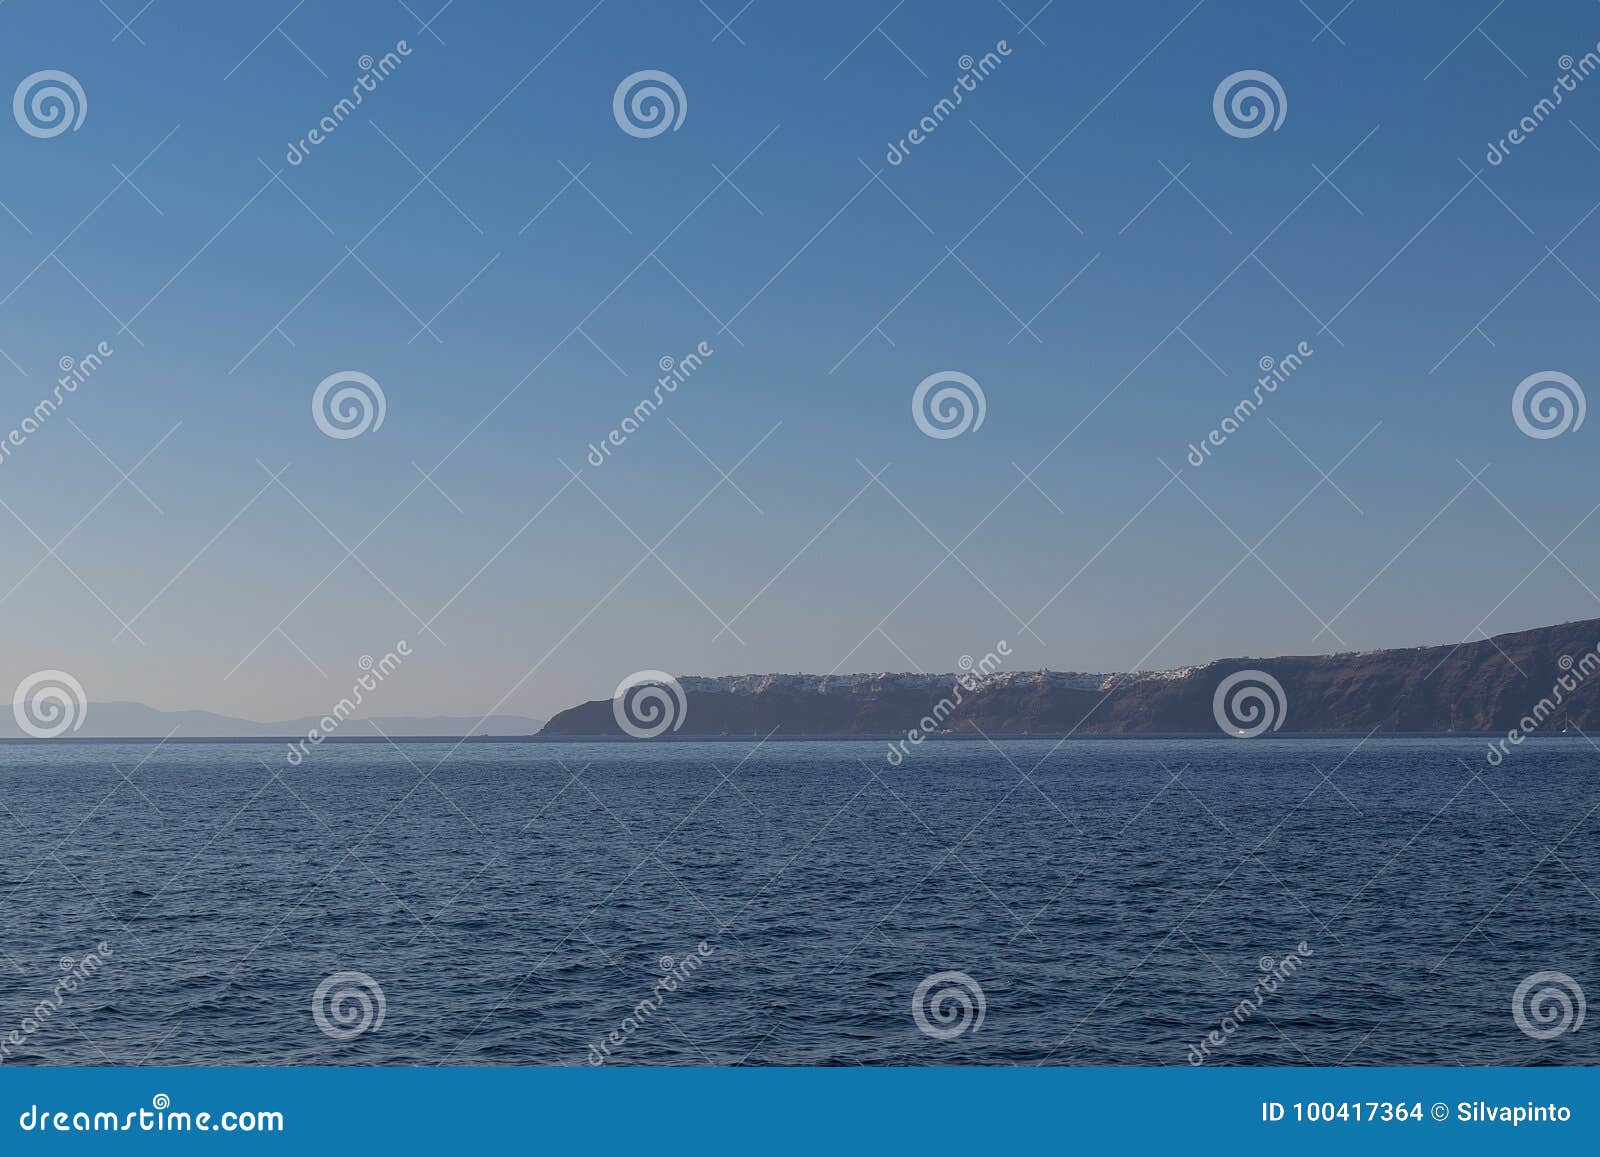 panoramica of fira, santorini view of the sea